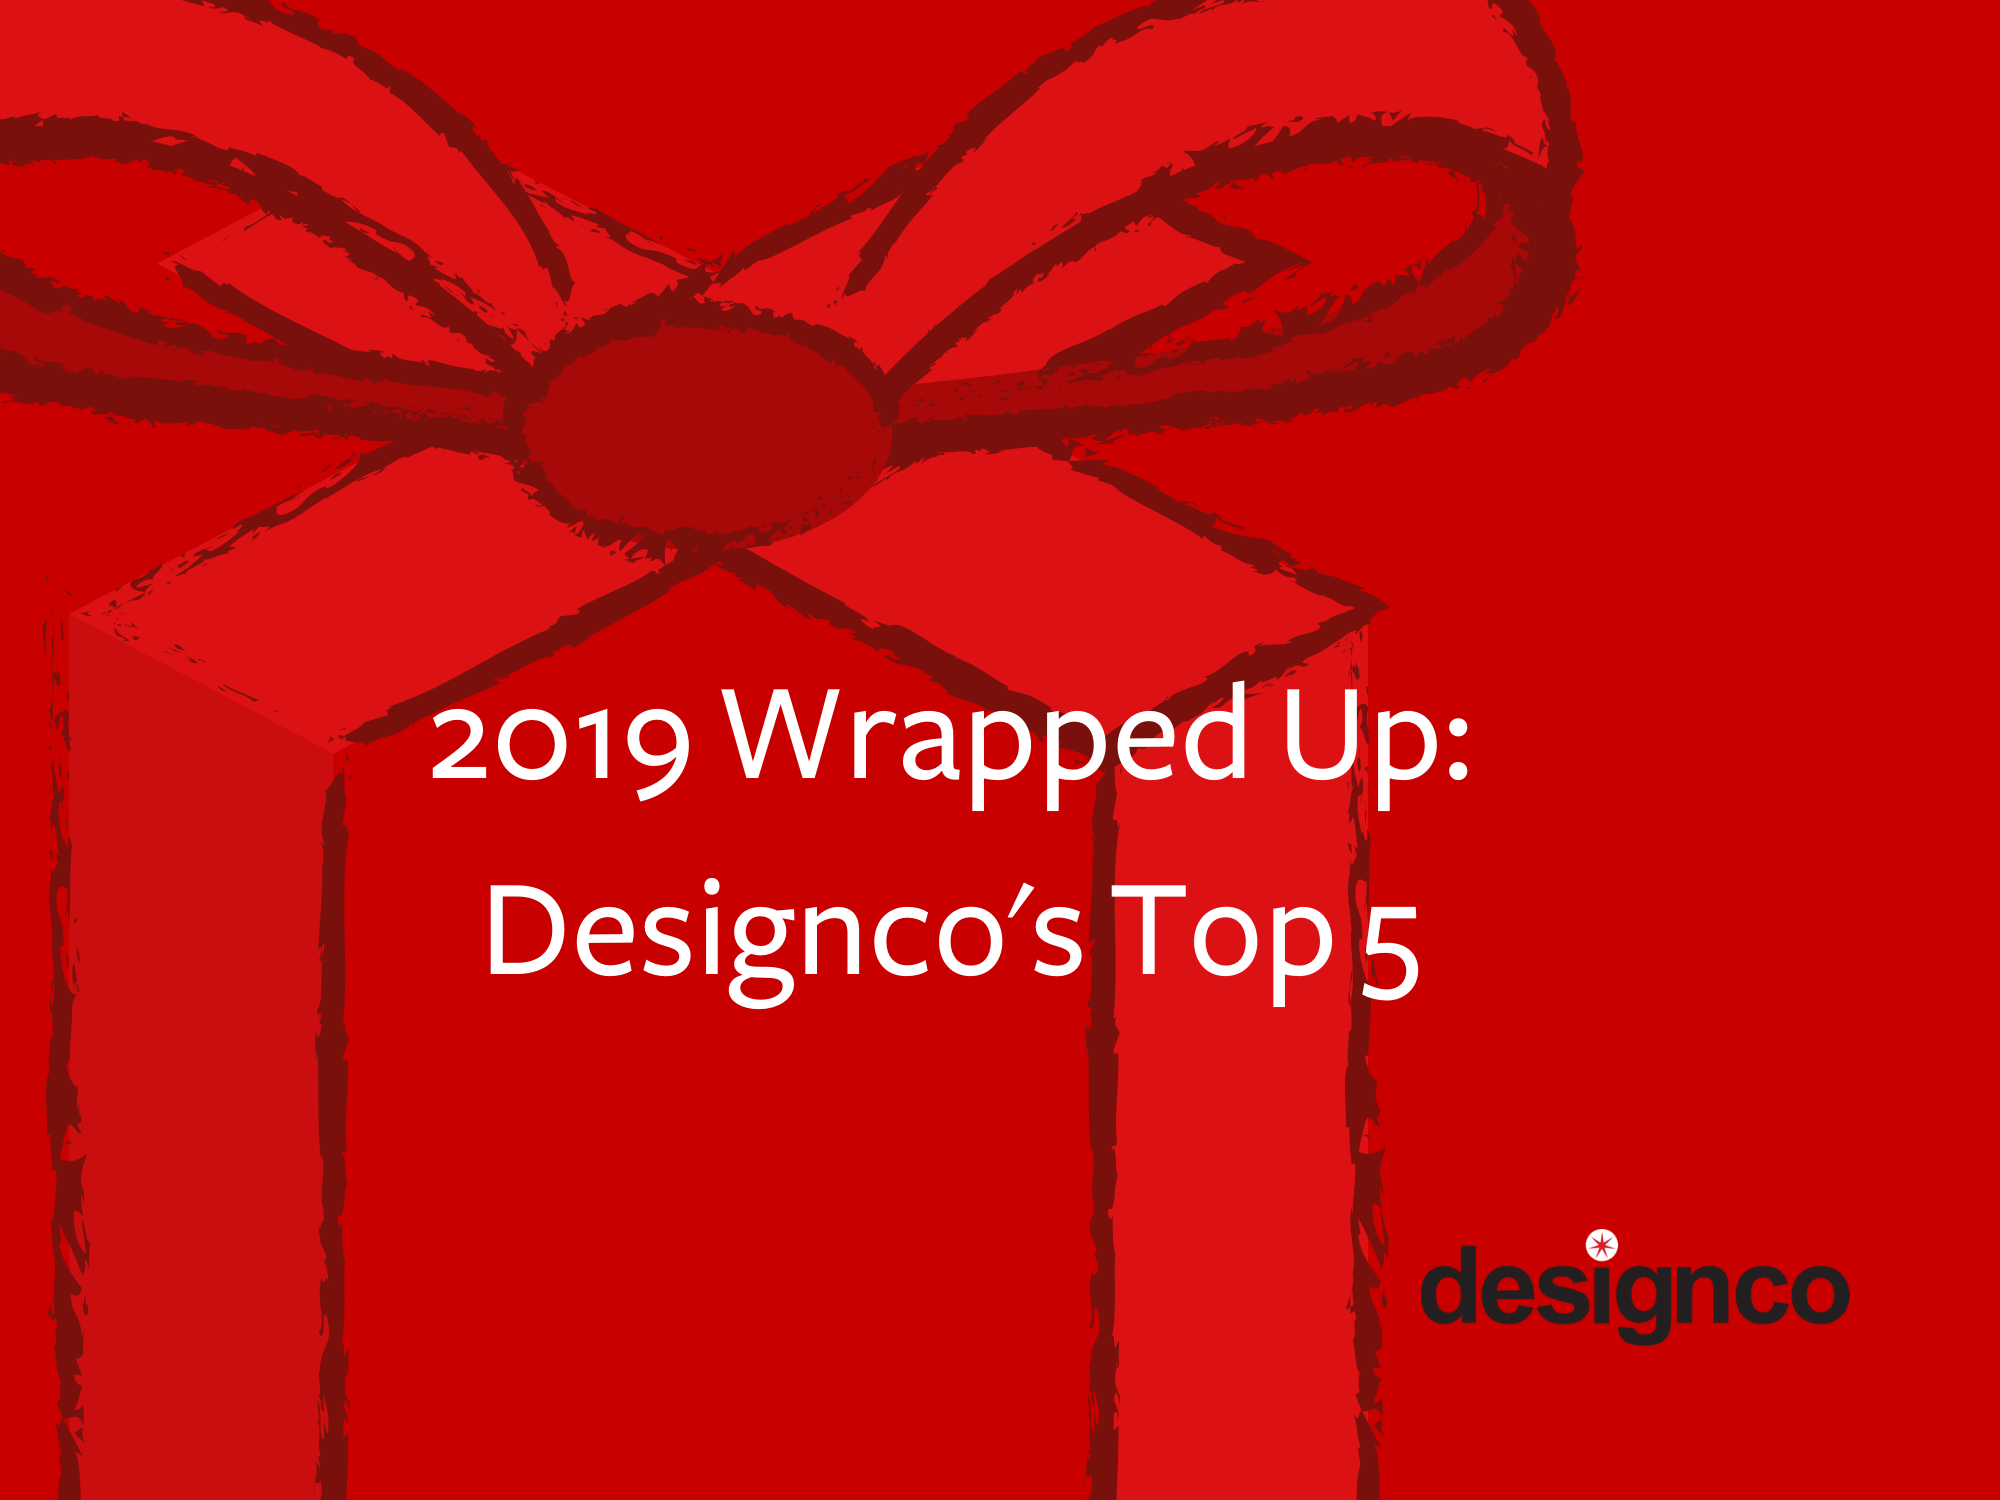 2019 Wrapped Up: Designco’s Top 5 headline image